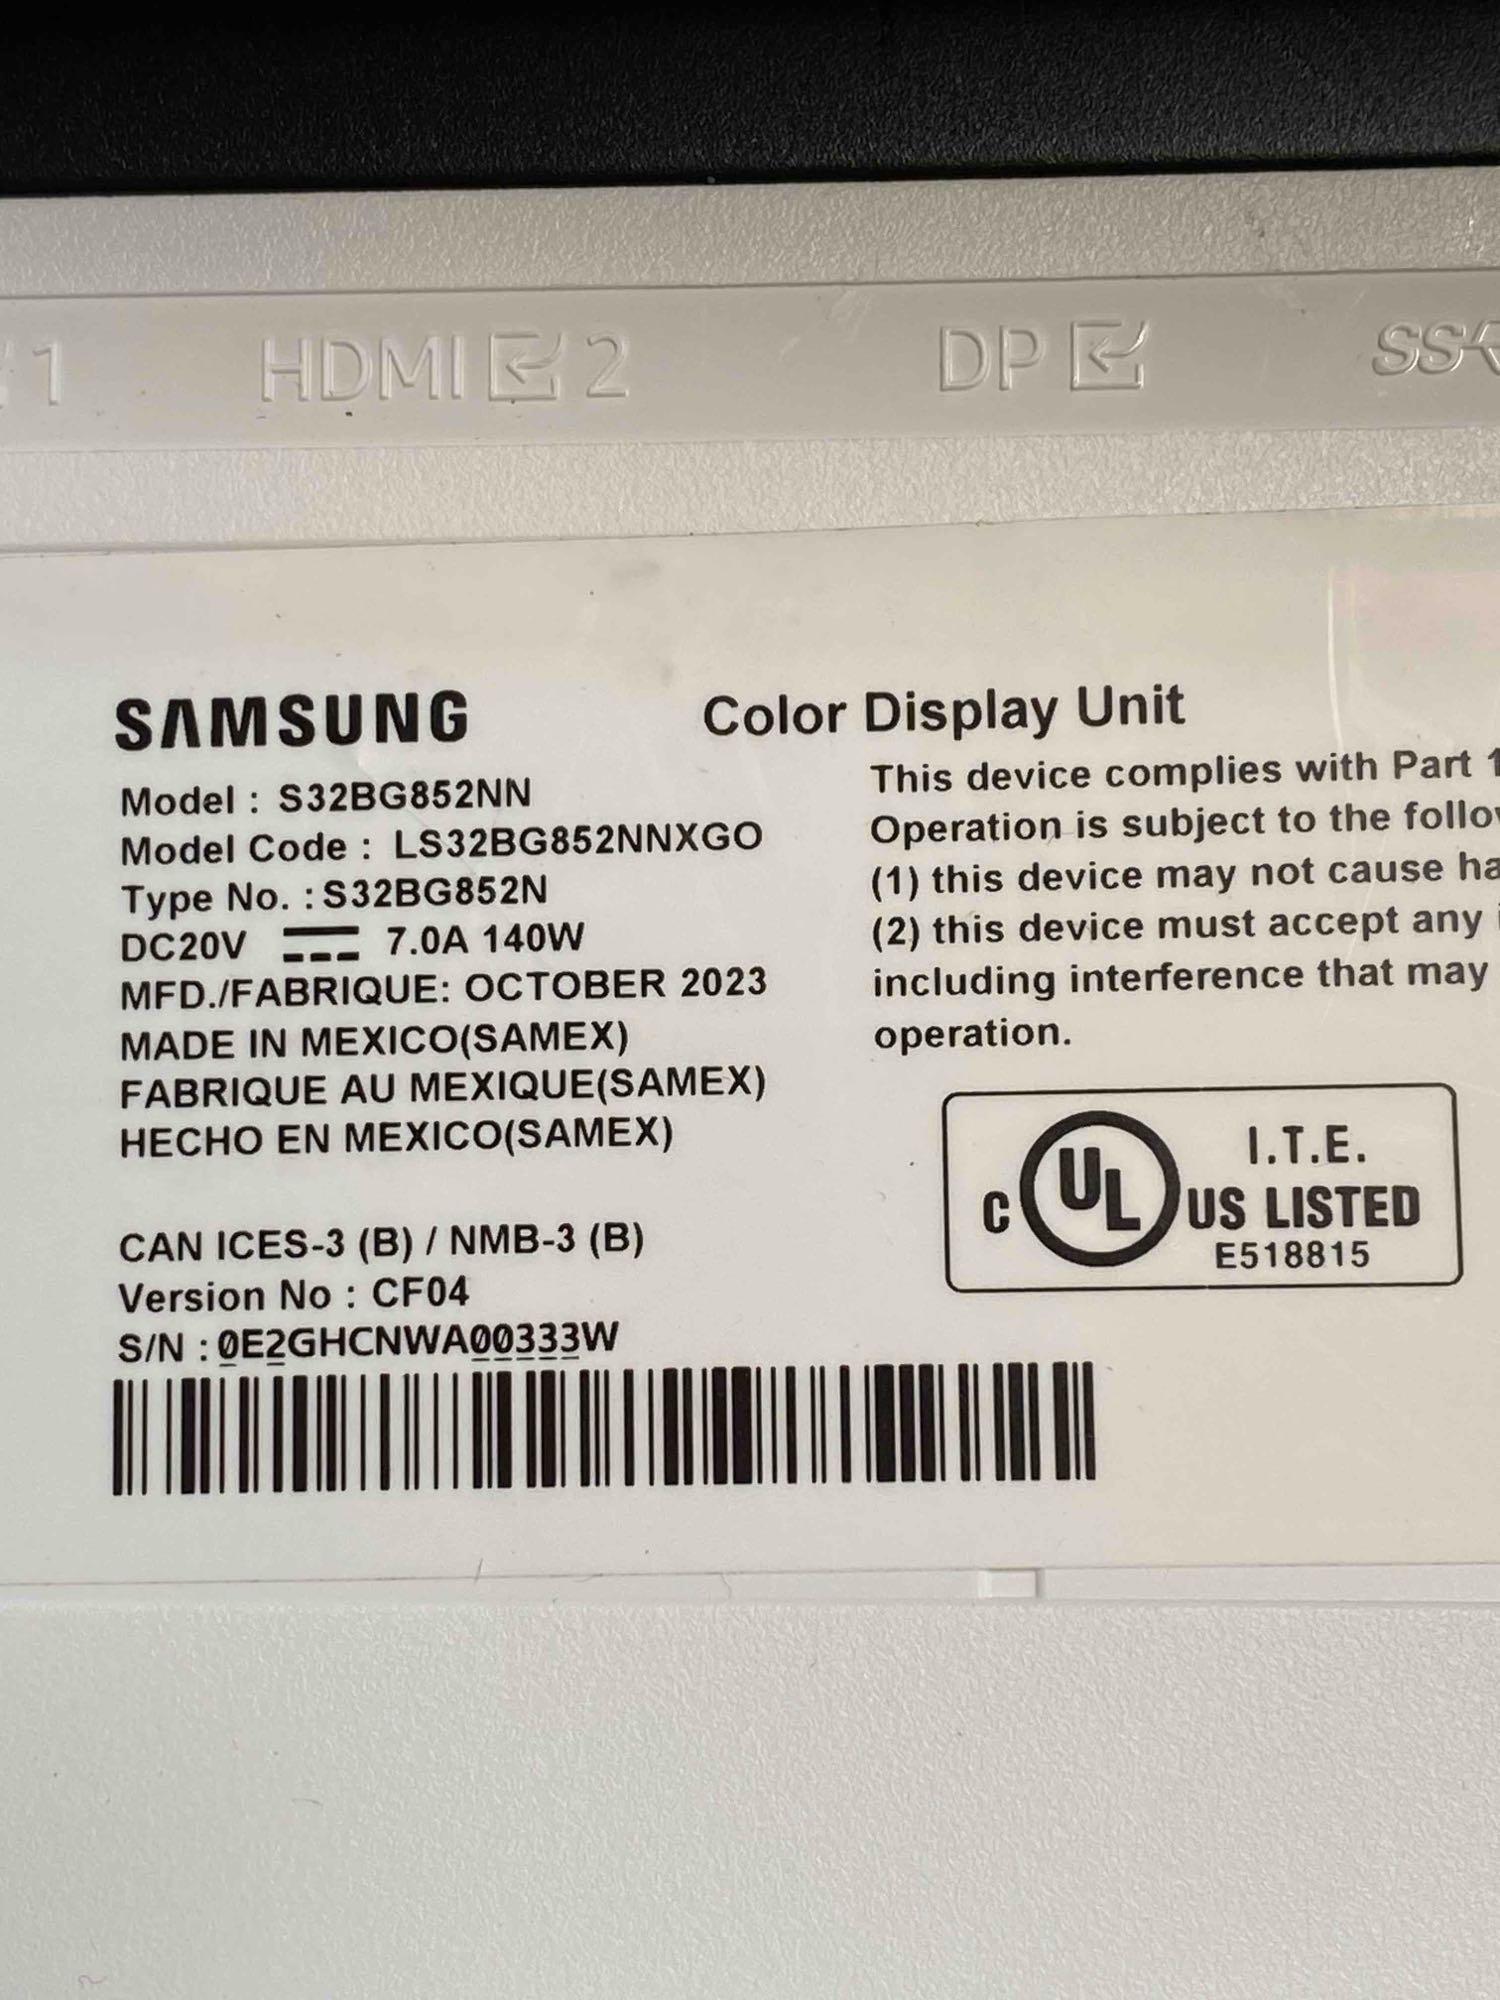 Samsung - Odyssey Neo G8 32" Curved 4K UHD FreeSync Gaming Monitor